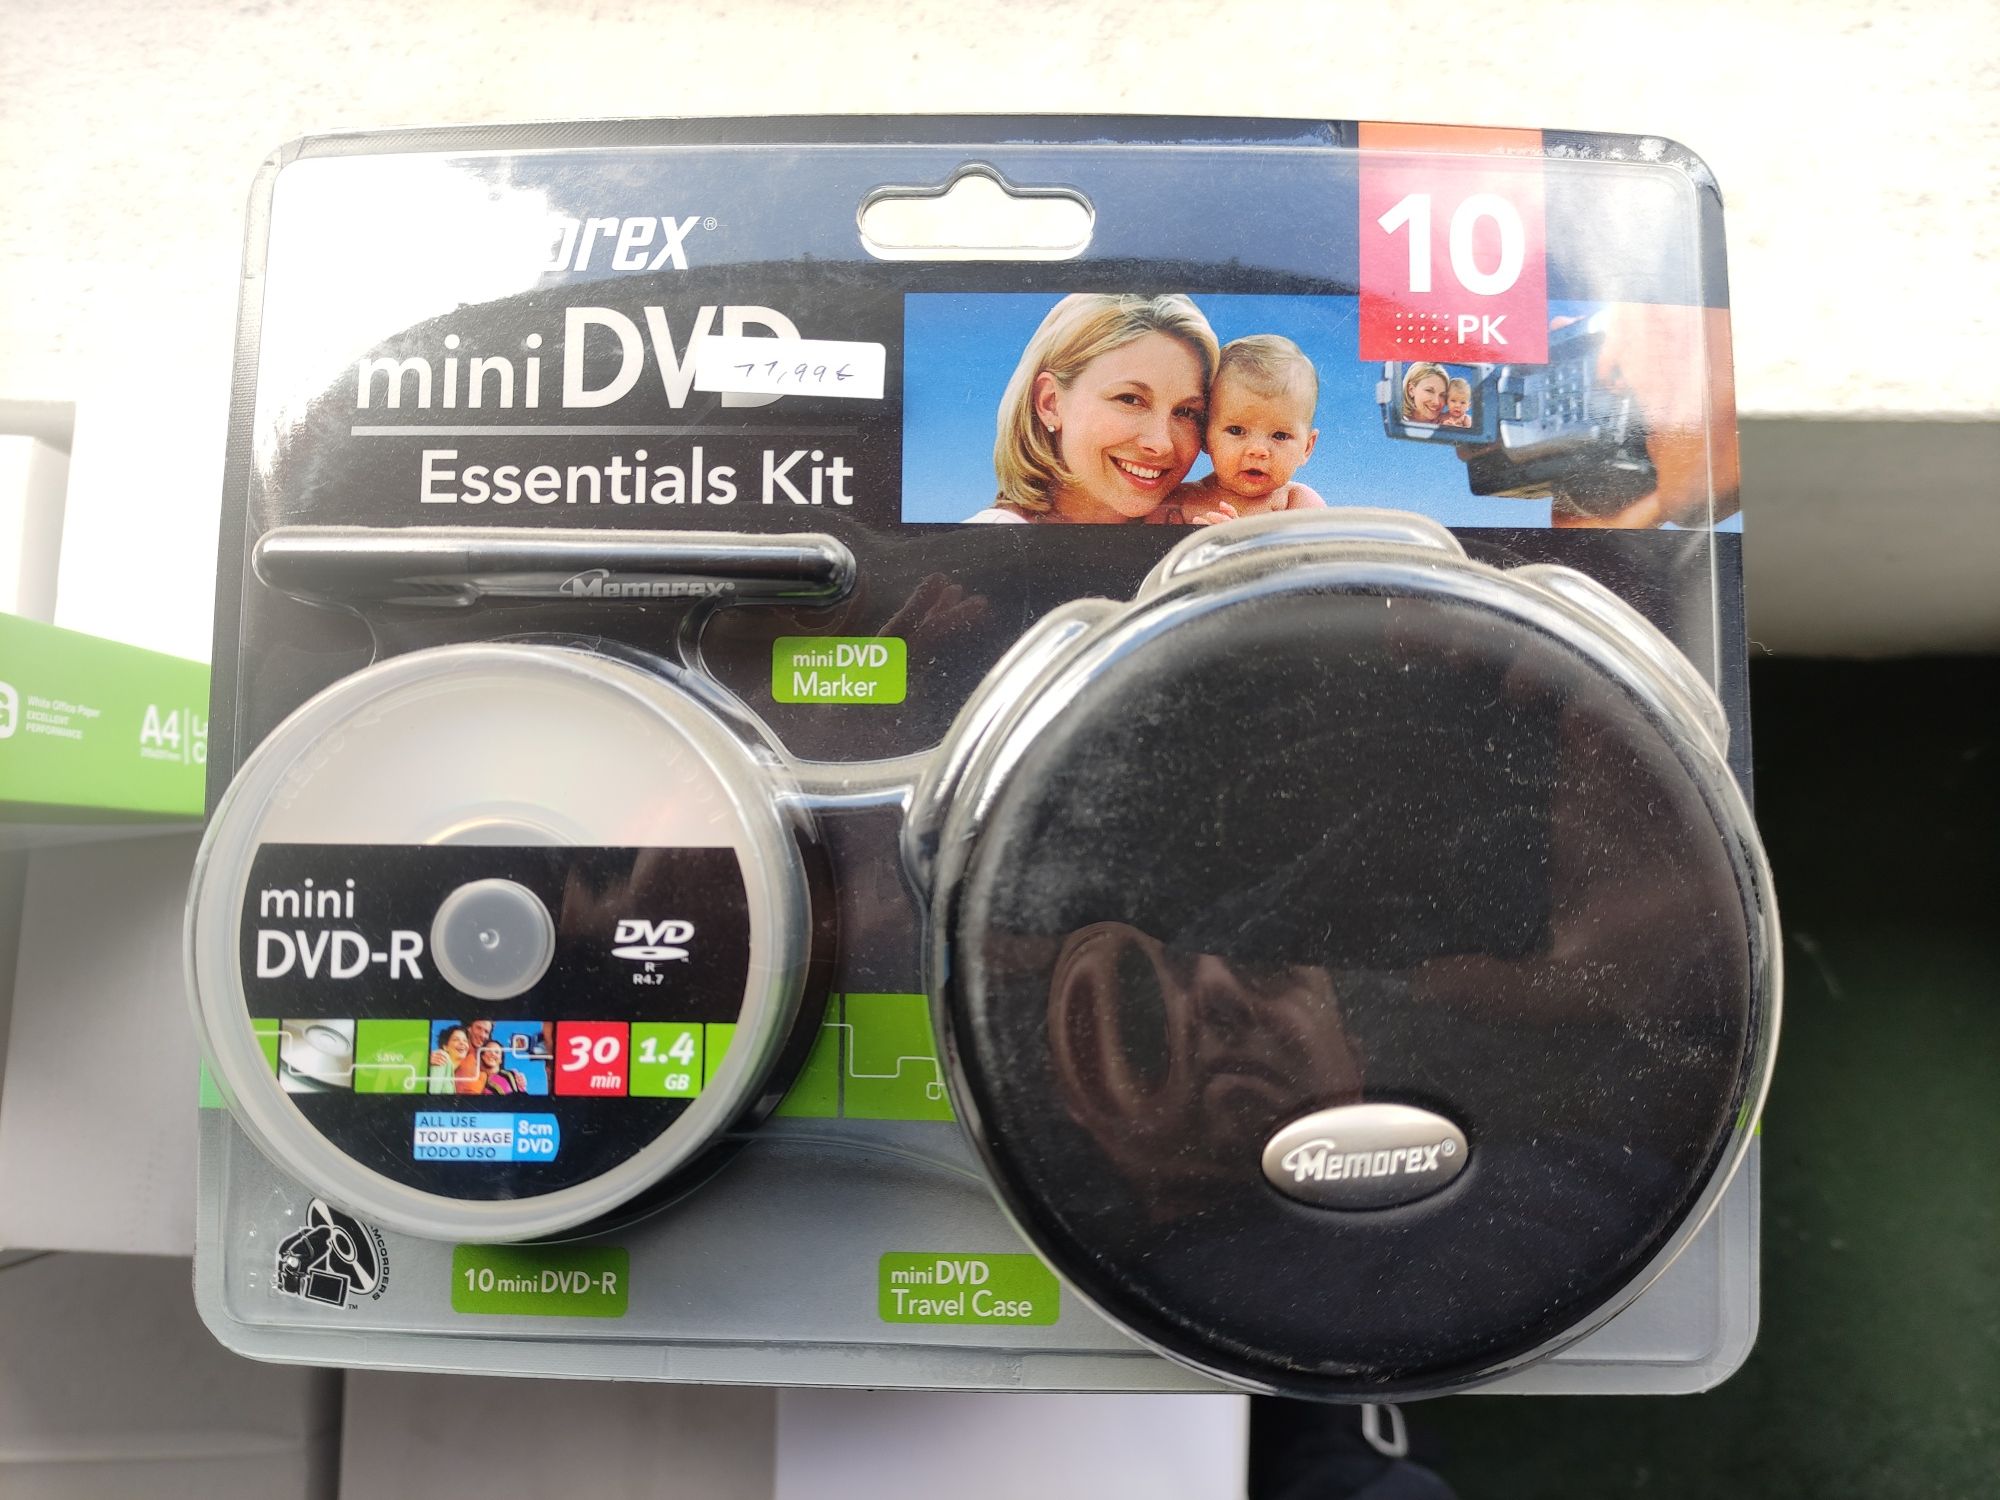 Memorex mini DVD-R 1.4Gb 30mins kit essencial dvd csout0058